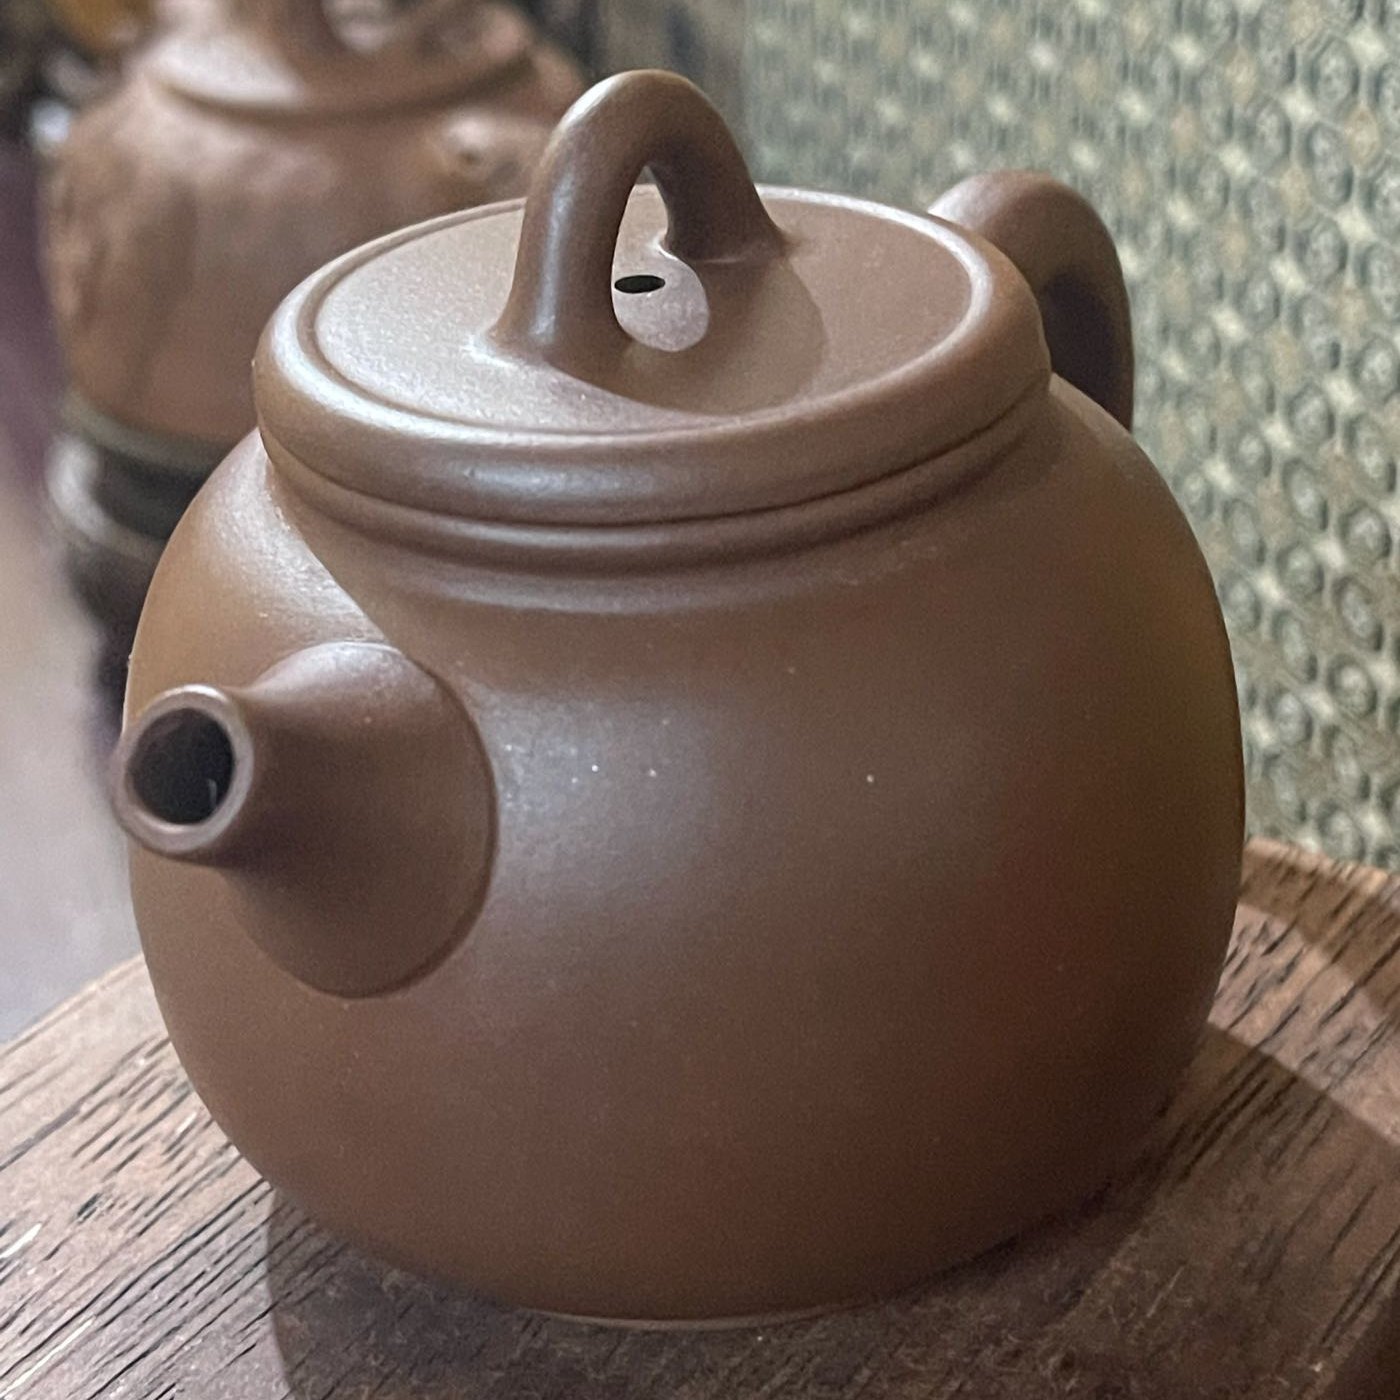 宜興老紫砂壺の純手作り名人李益順制 - 陶芸